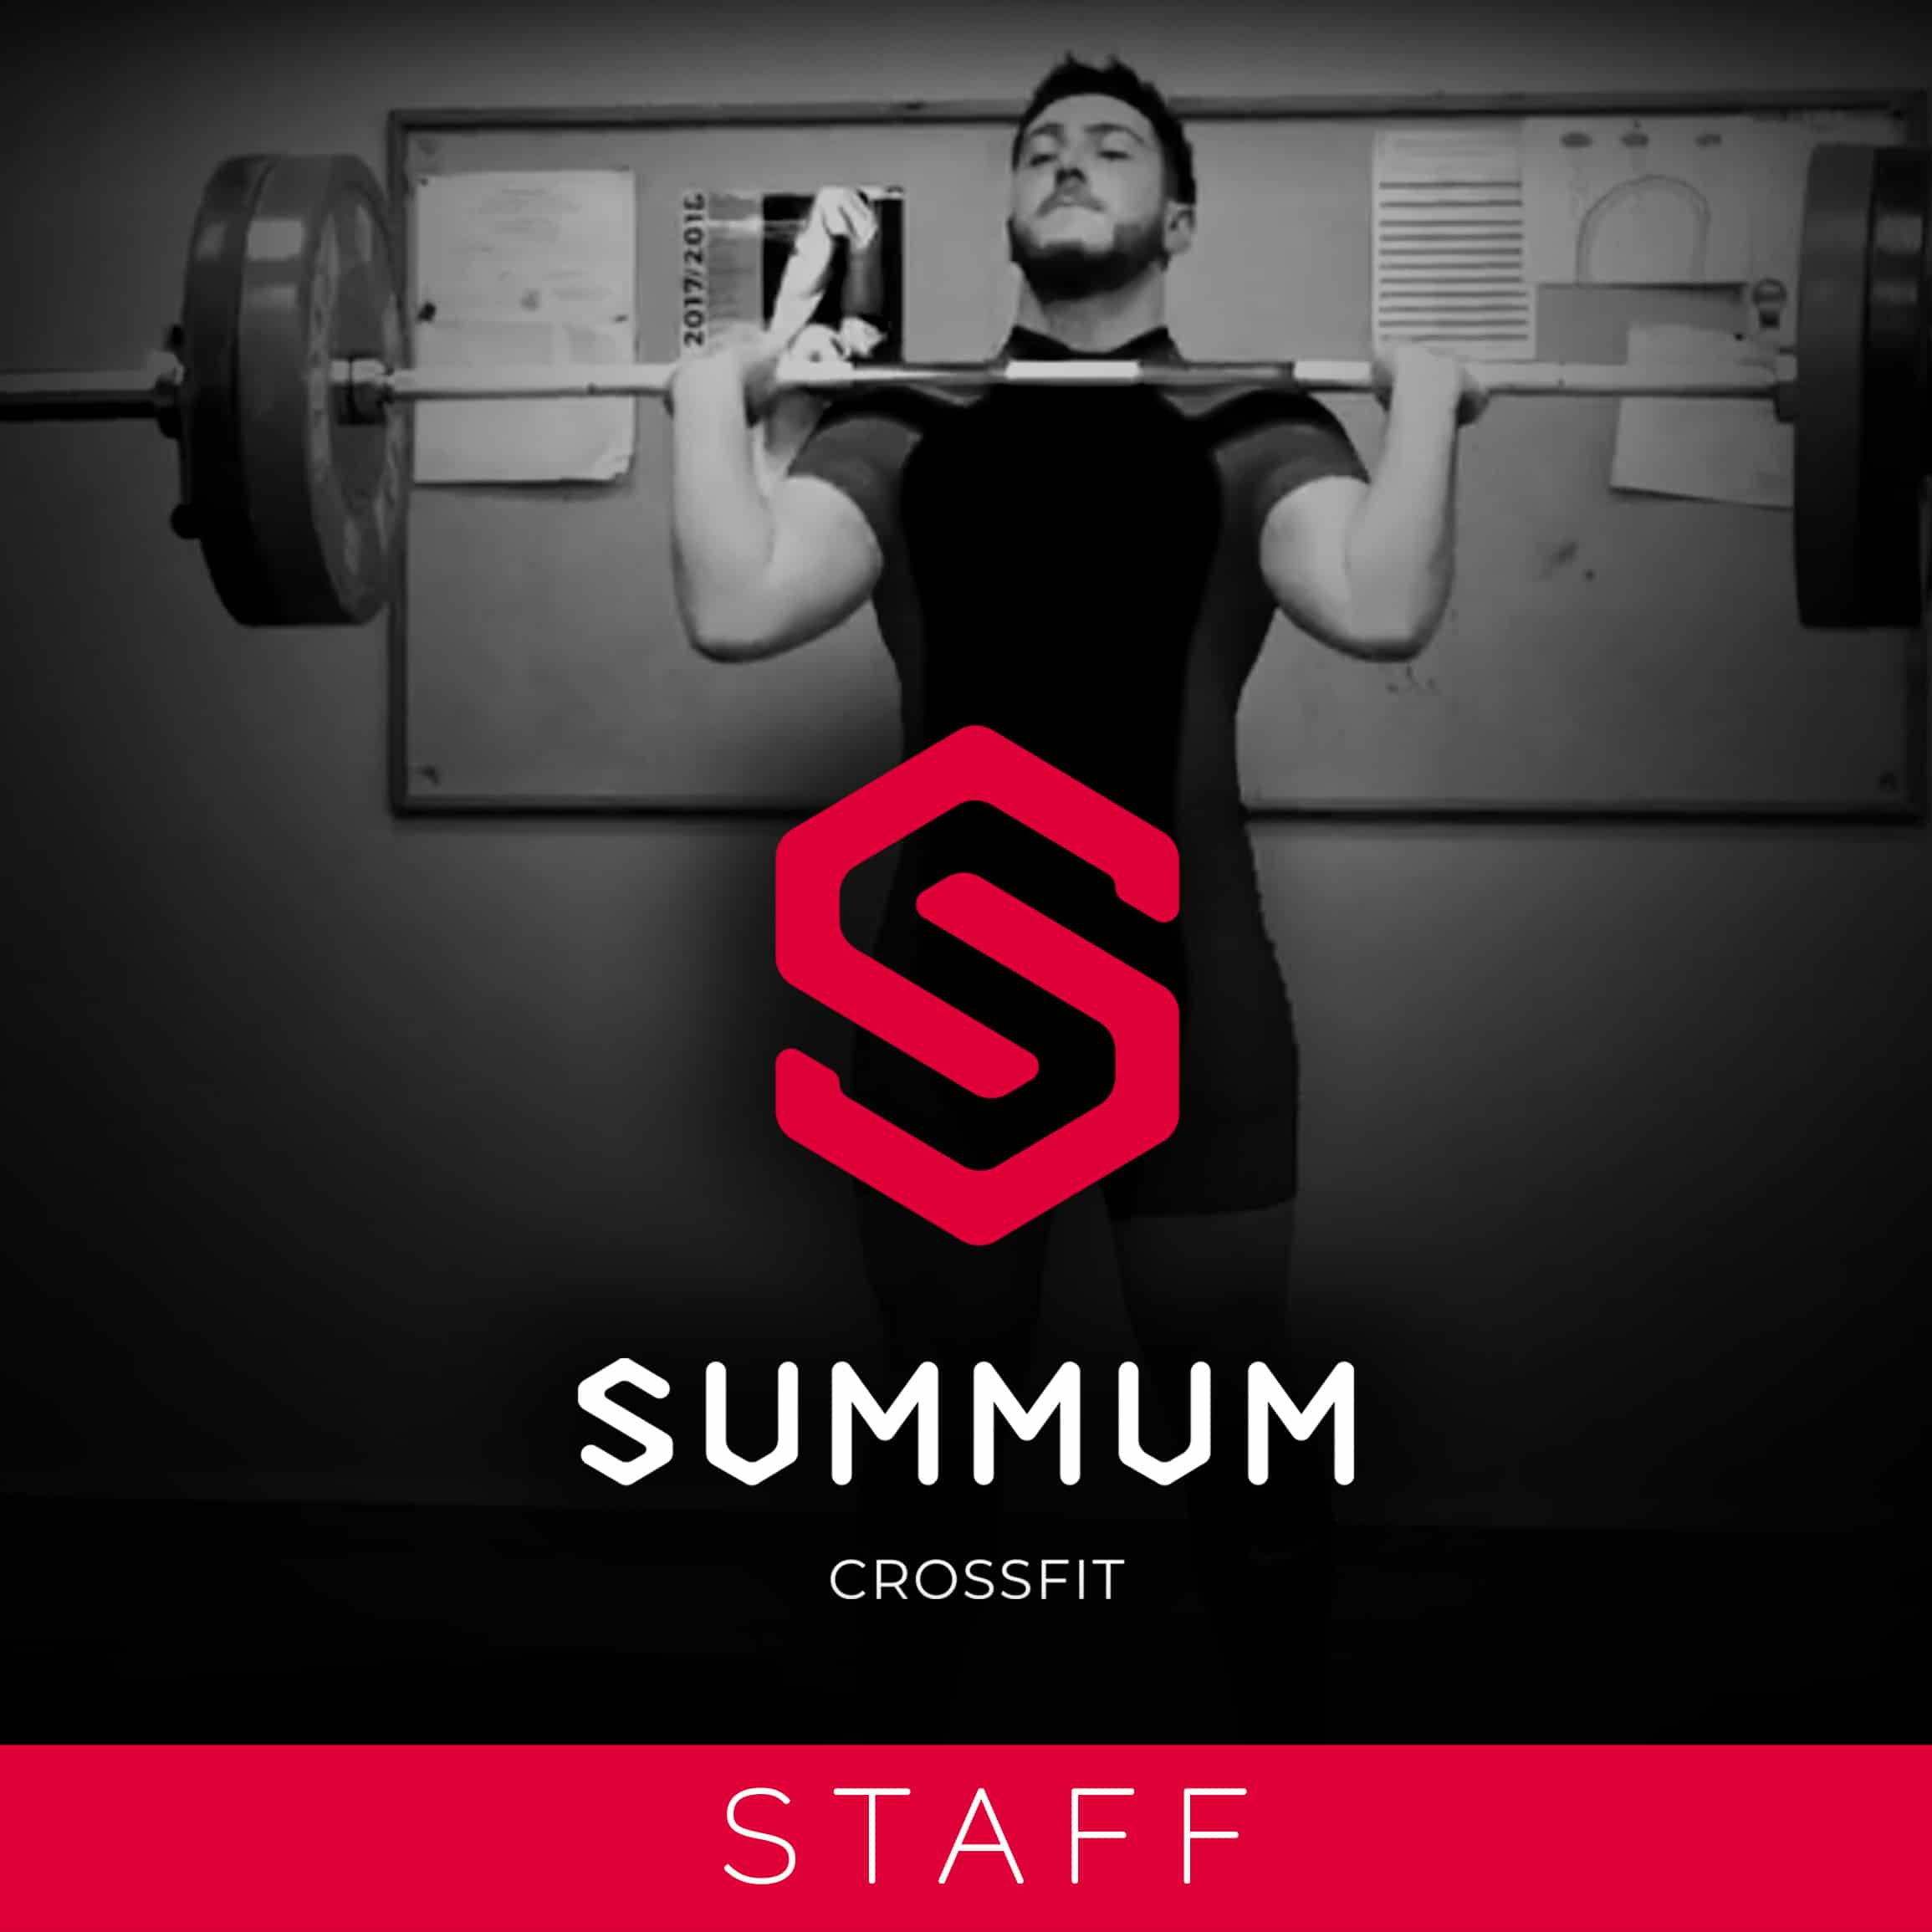 SUMMUM-CROSSFIT-Banner-Carre-Profil-Staff-7